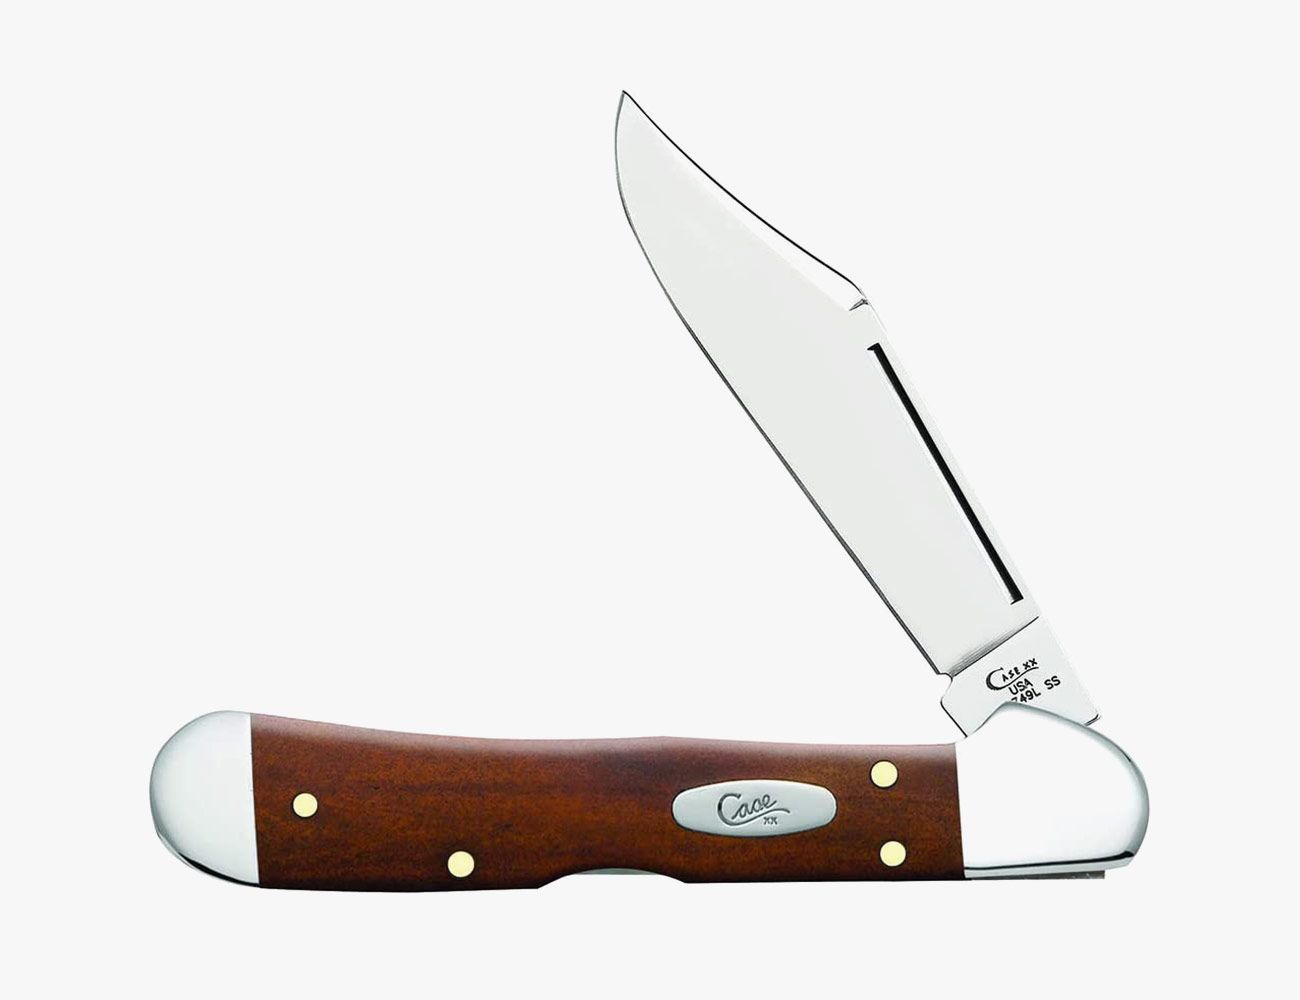 https://hips.hearstapps.com/vader-prod.s3.amazonaws.com/1618955562-12-types-of-knife-blades-case-knives-mini-copperlock-1618955557.jpg